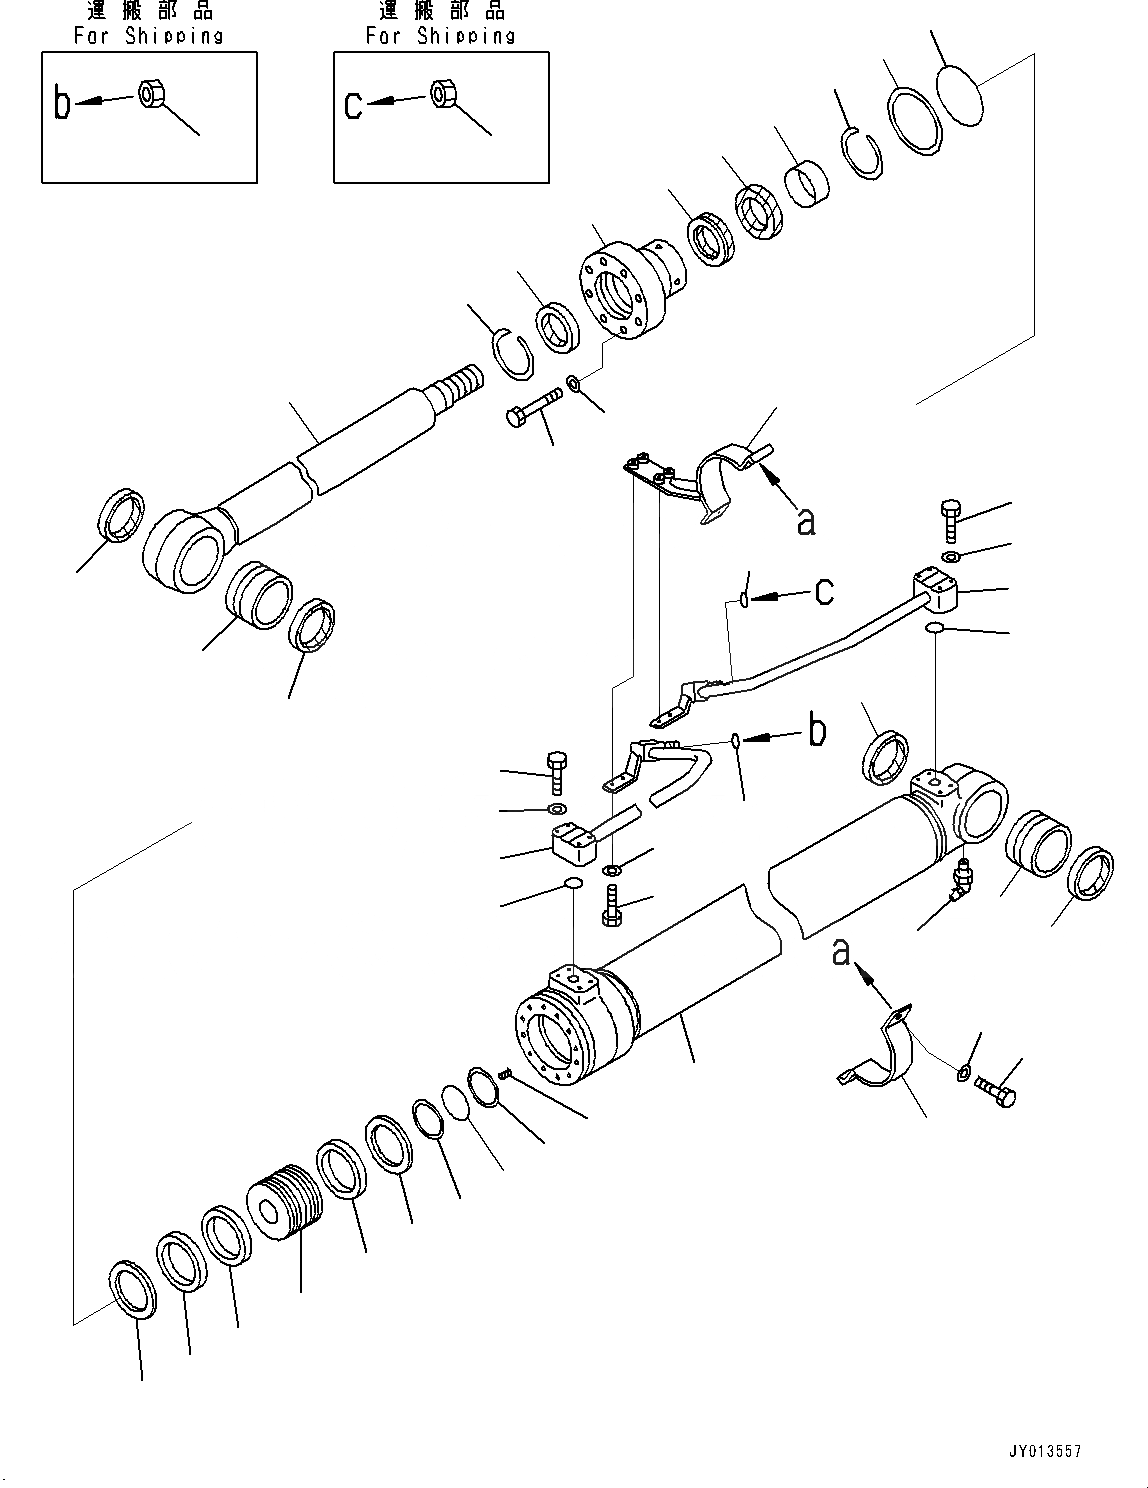 Схема запчастей Komatsu PC130-8 - ЦИЛИНДР СТРЕЛЫ, ЧАС. СИСТ. СМАЗКИ ТИП(№C-) ЦИЛИНДР СТРЕЛЫ, ЧАС. СИСТ. СМАЗКИ ТИП